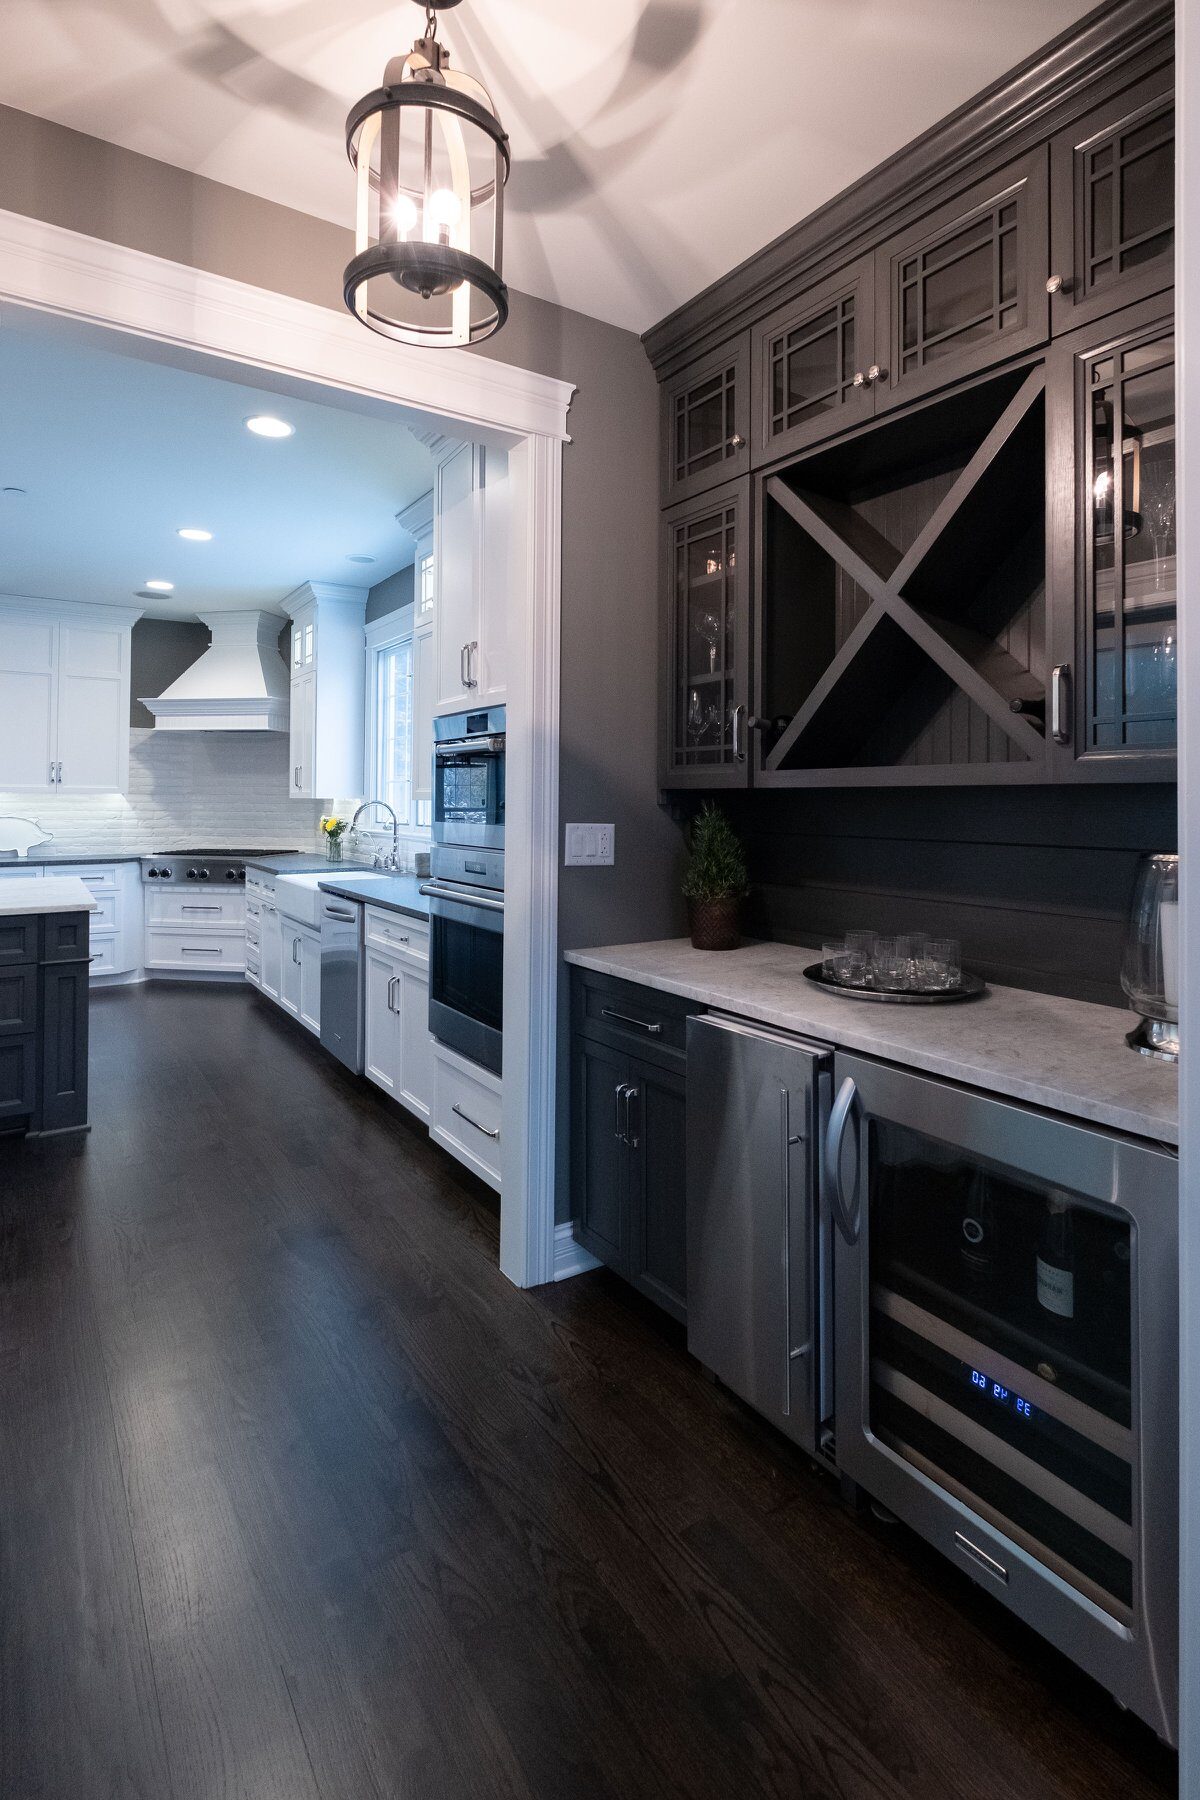 Beautiful kitchen designed by Fears Construction featuring B Design in Glen Ellyn, IL.